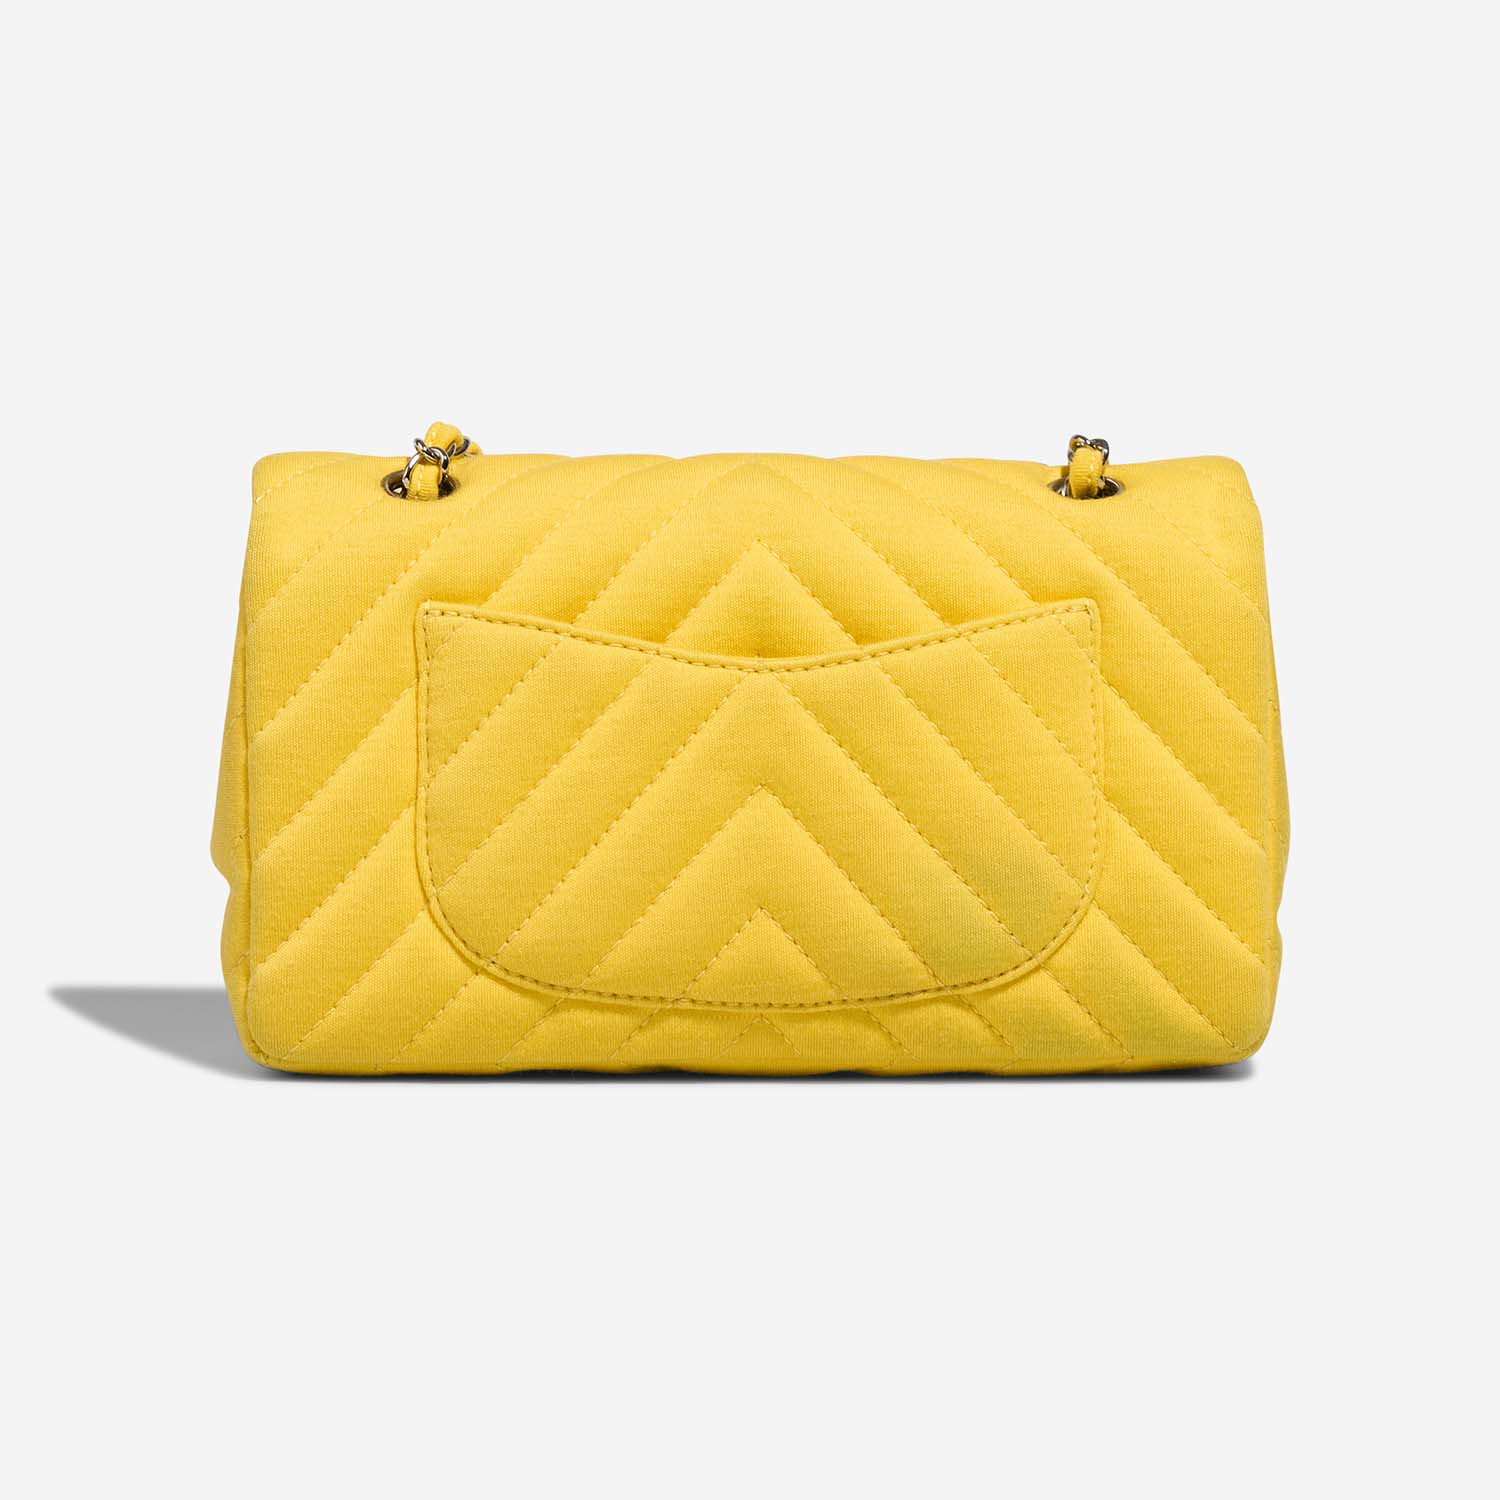 chanel yellow clutch purse